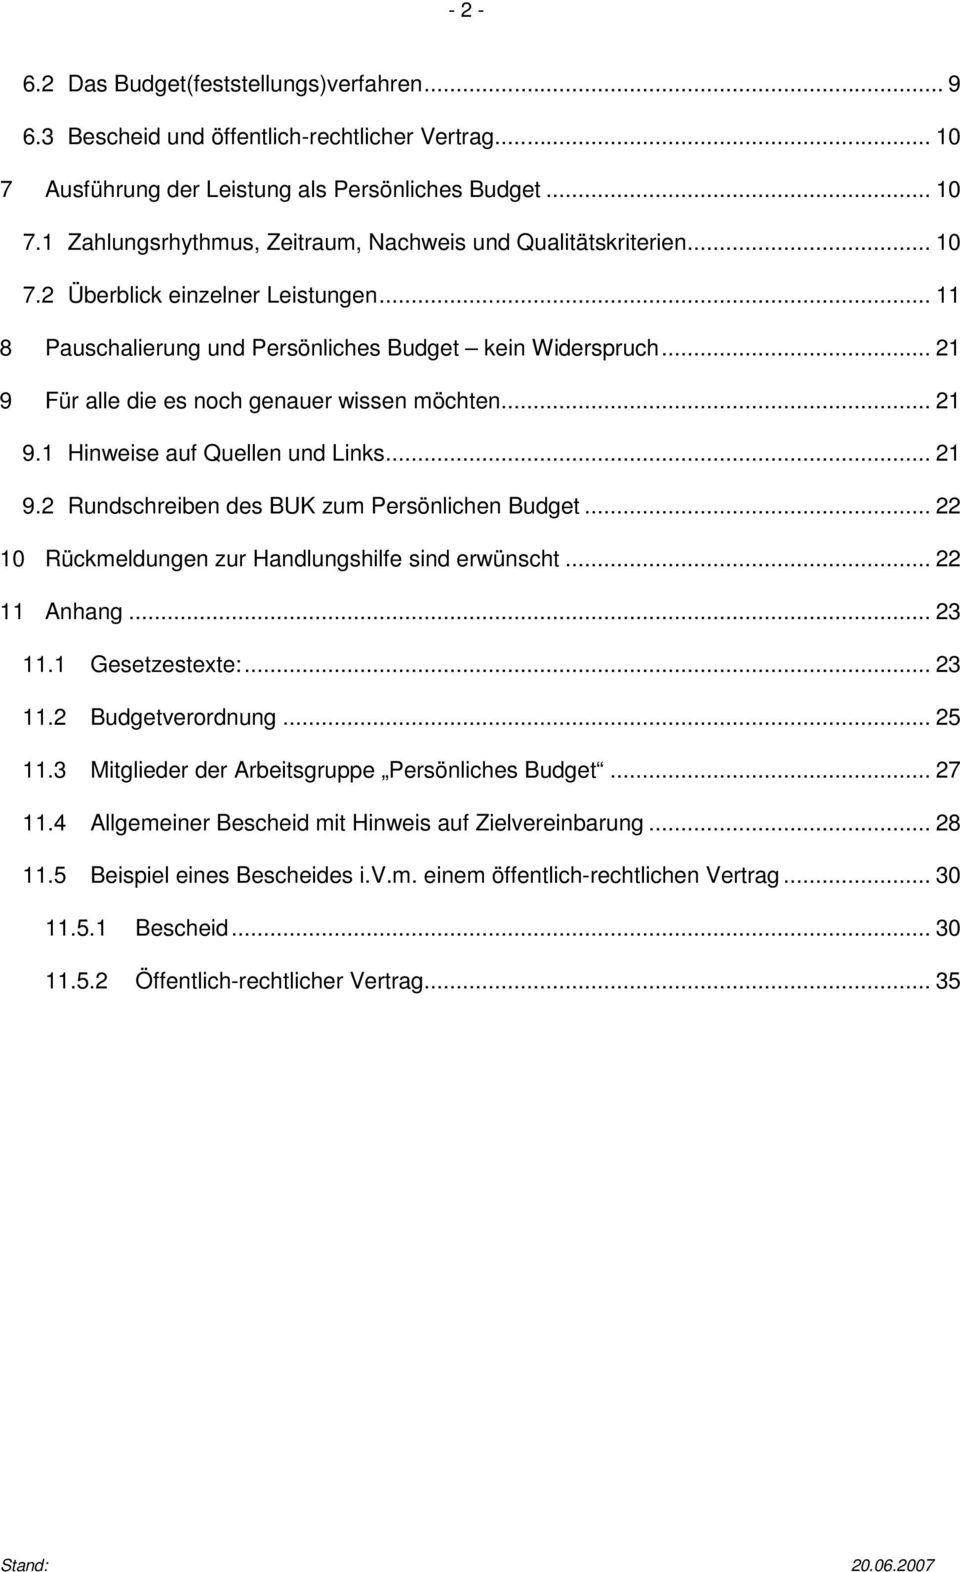 .. 21 9.2 Rundschreiben des BUK zum Persönlichen Budget... 22 10 Rückmeldungen zur Handlungshilfe sind erwünscht... 22 11 Anhang... 23 11.1 Gesetzestexte:... 23 11.2 Budgetverordnung... 25 11.